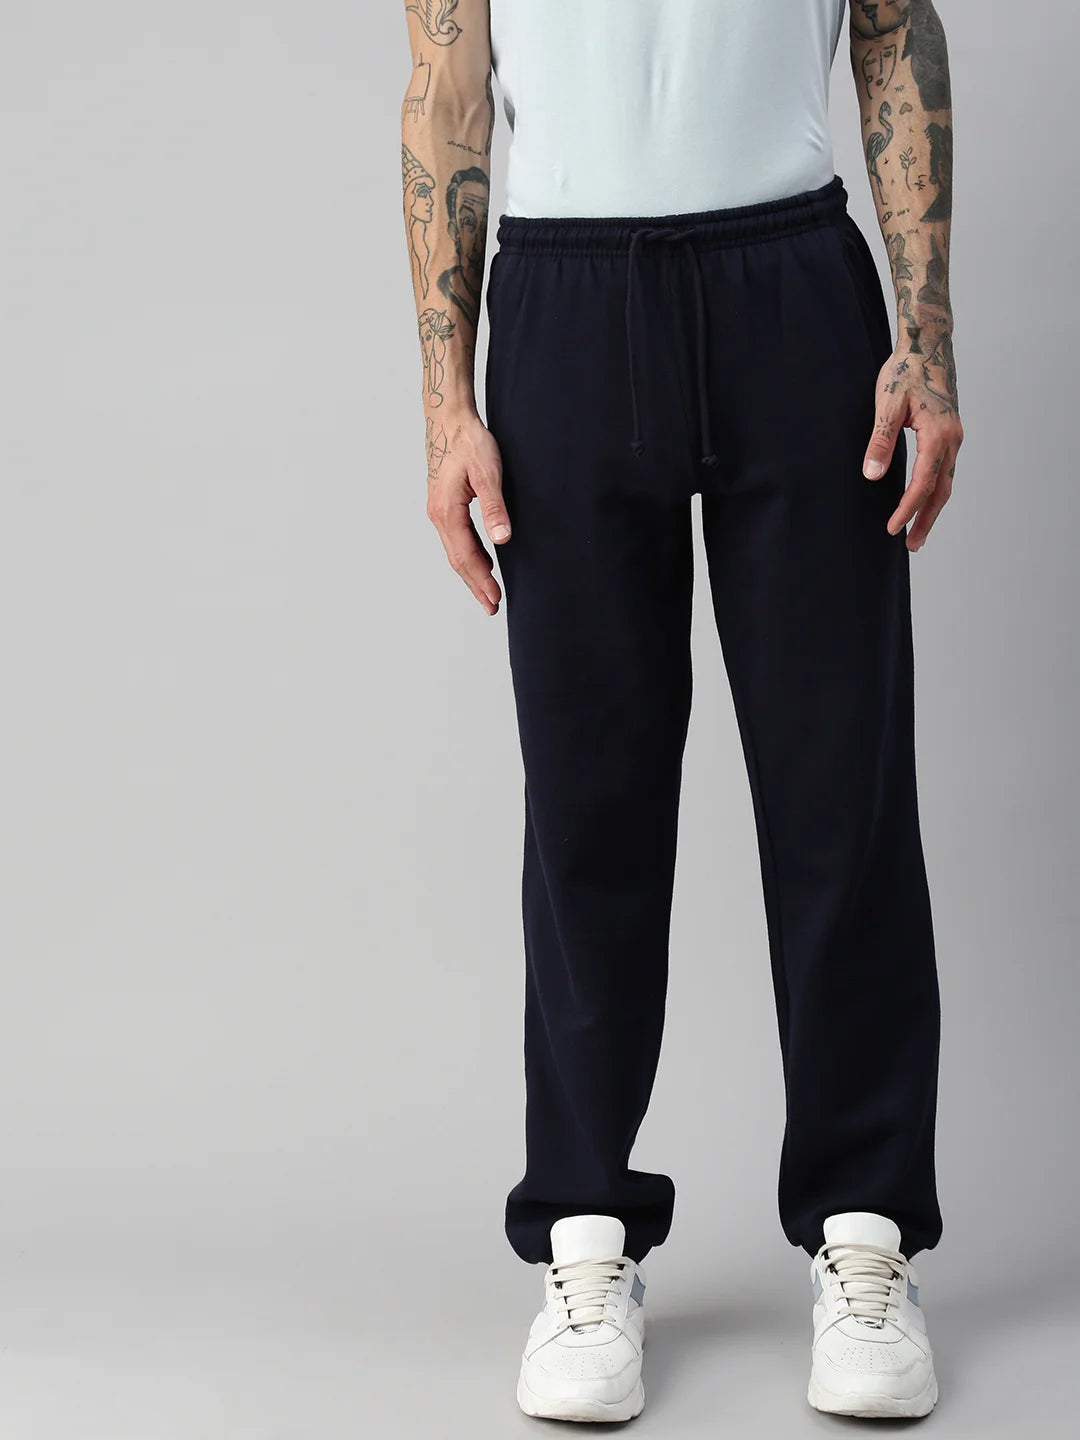 homme-vico-coton-polyester-track-pants-noir-front